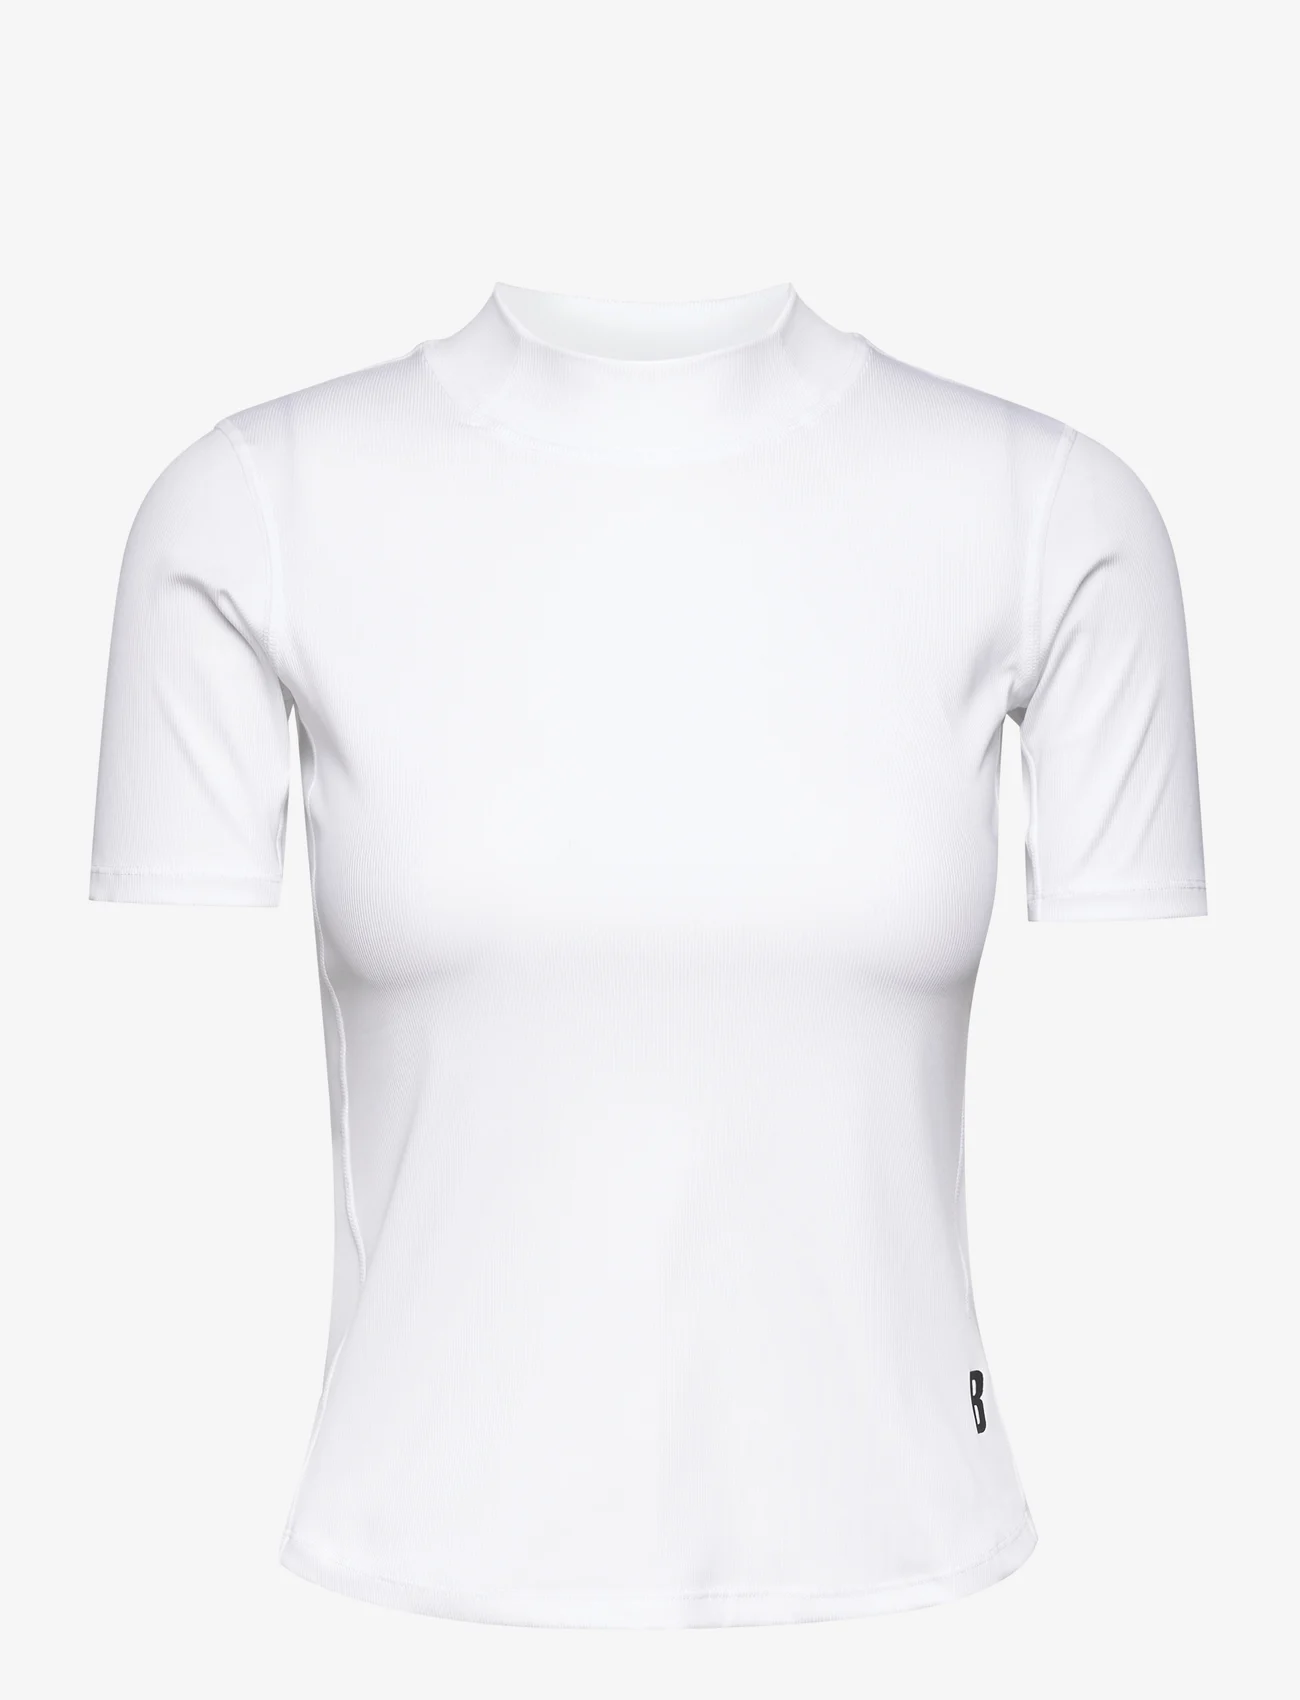 Björn Borg - ACE RIB T-SHIRT - t-shirts - brilliant white - 1